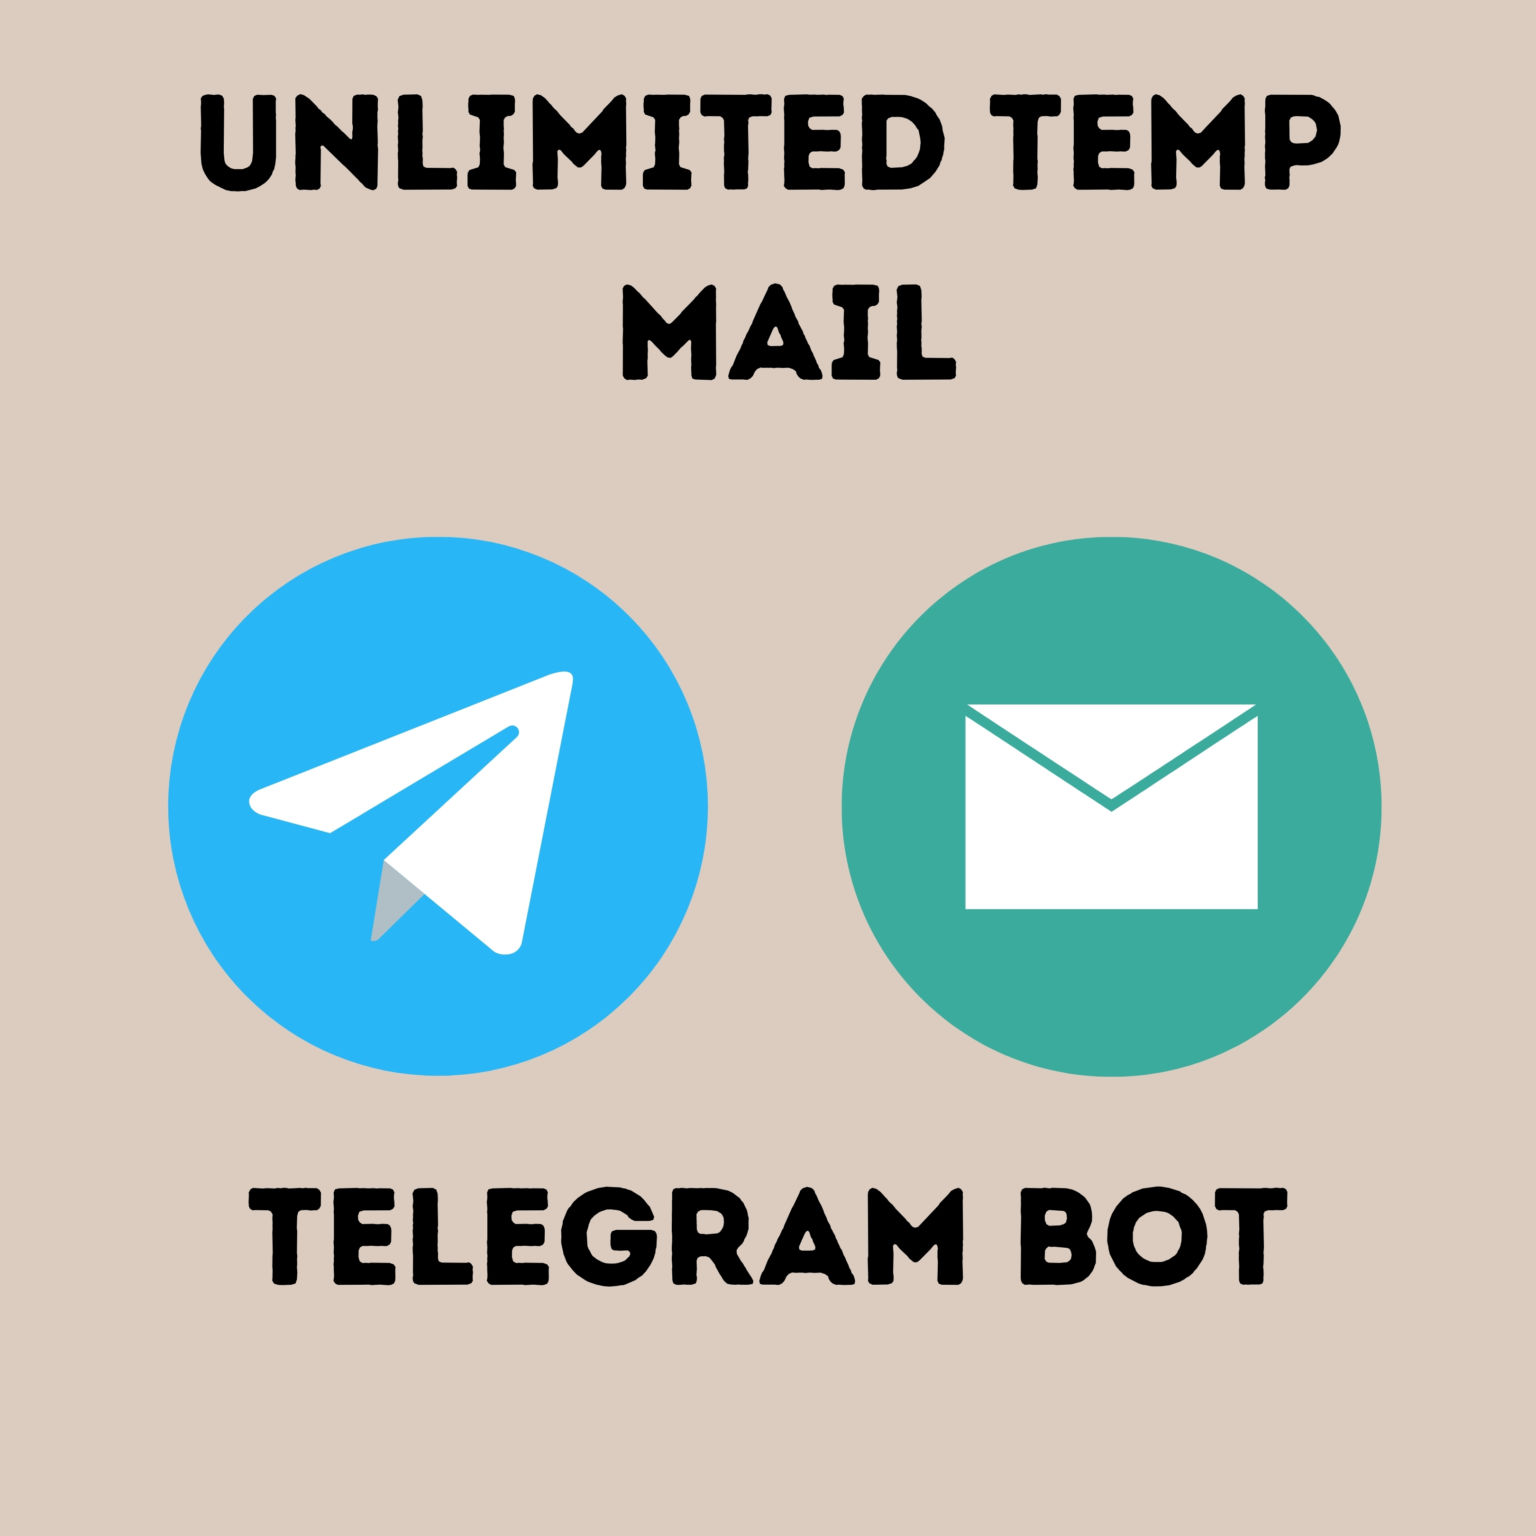 [Must See] Unlimited Temporary Email জেনারেট করুন লাইফটাইমের জন্য Telegram এর মাধ্যমে। সাথে থাকছে কাস্টম নেম এর সুবিধা?